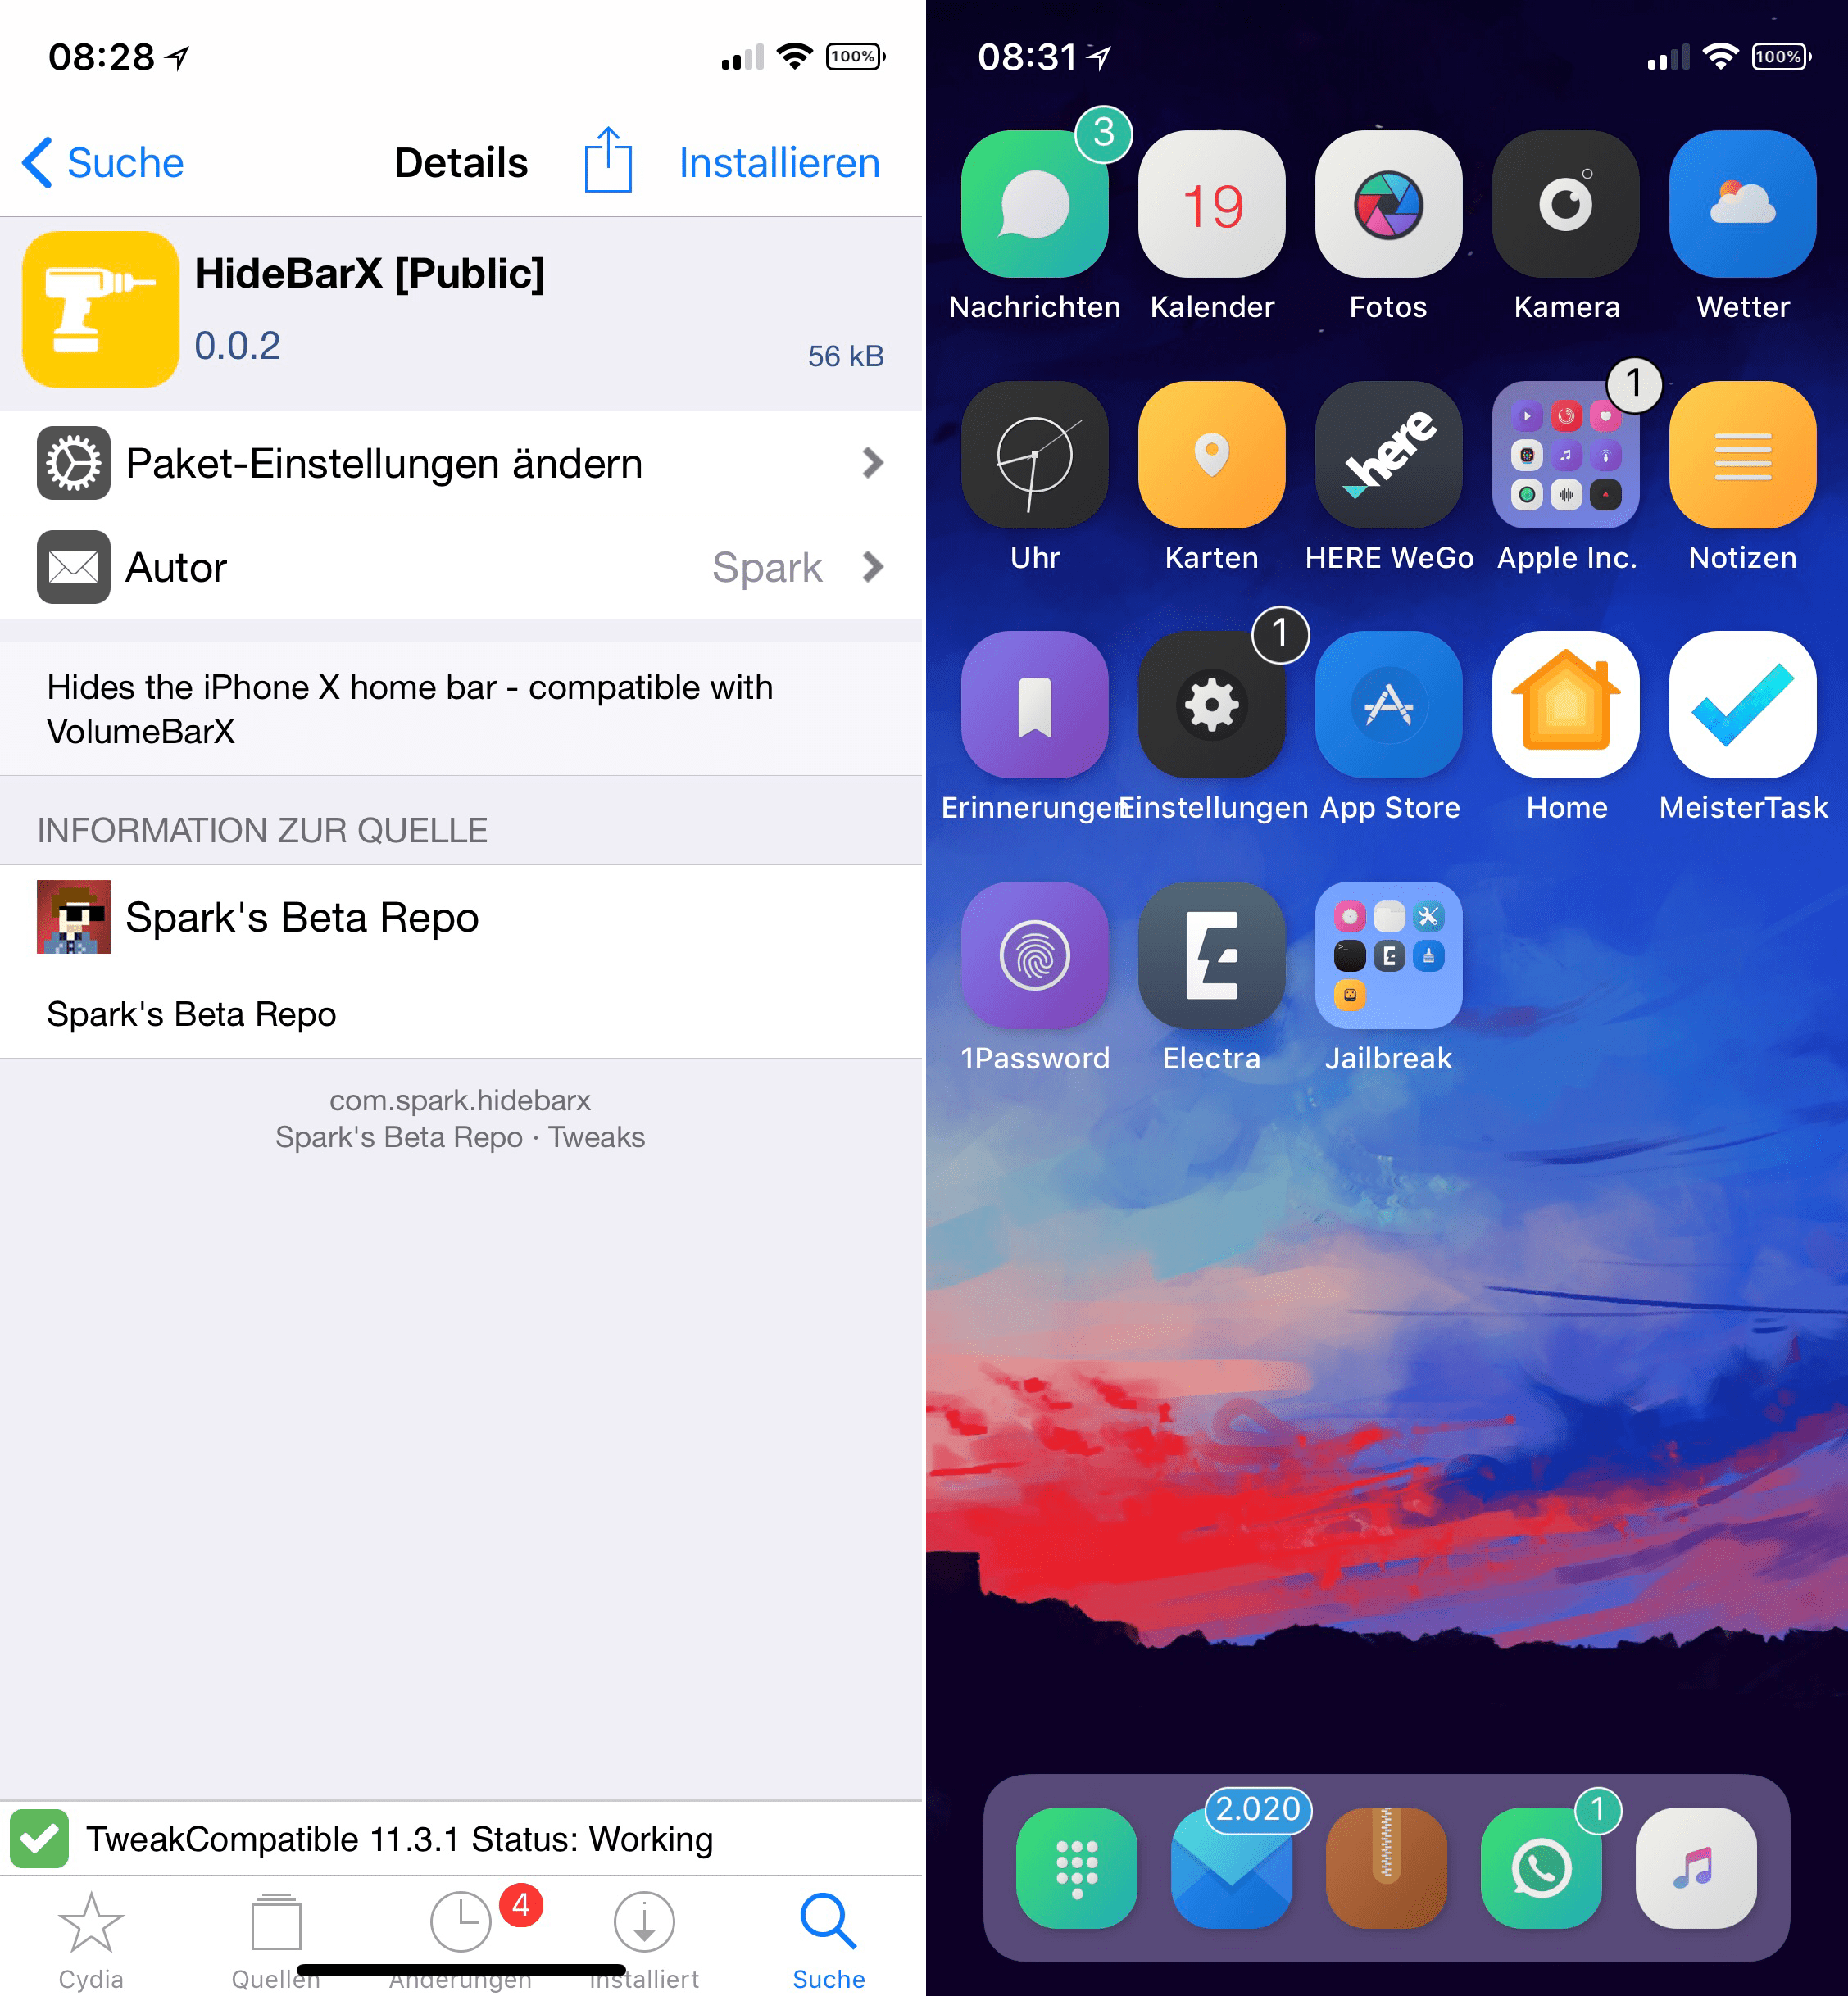 Remove Homebar on the iPhone X, HideBar X [Public], Top, Cydia, Tweak, Repo, free, kostenlos, hack, hack4life, Fabian Geissler, seriös, kompetent